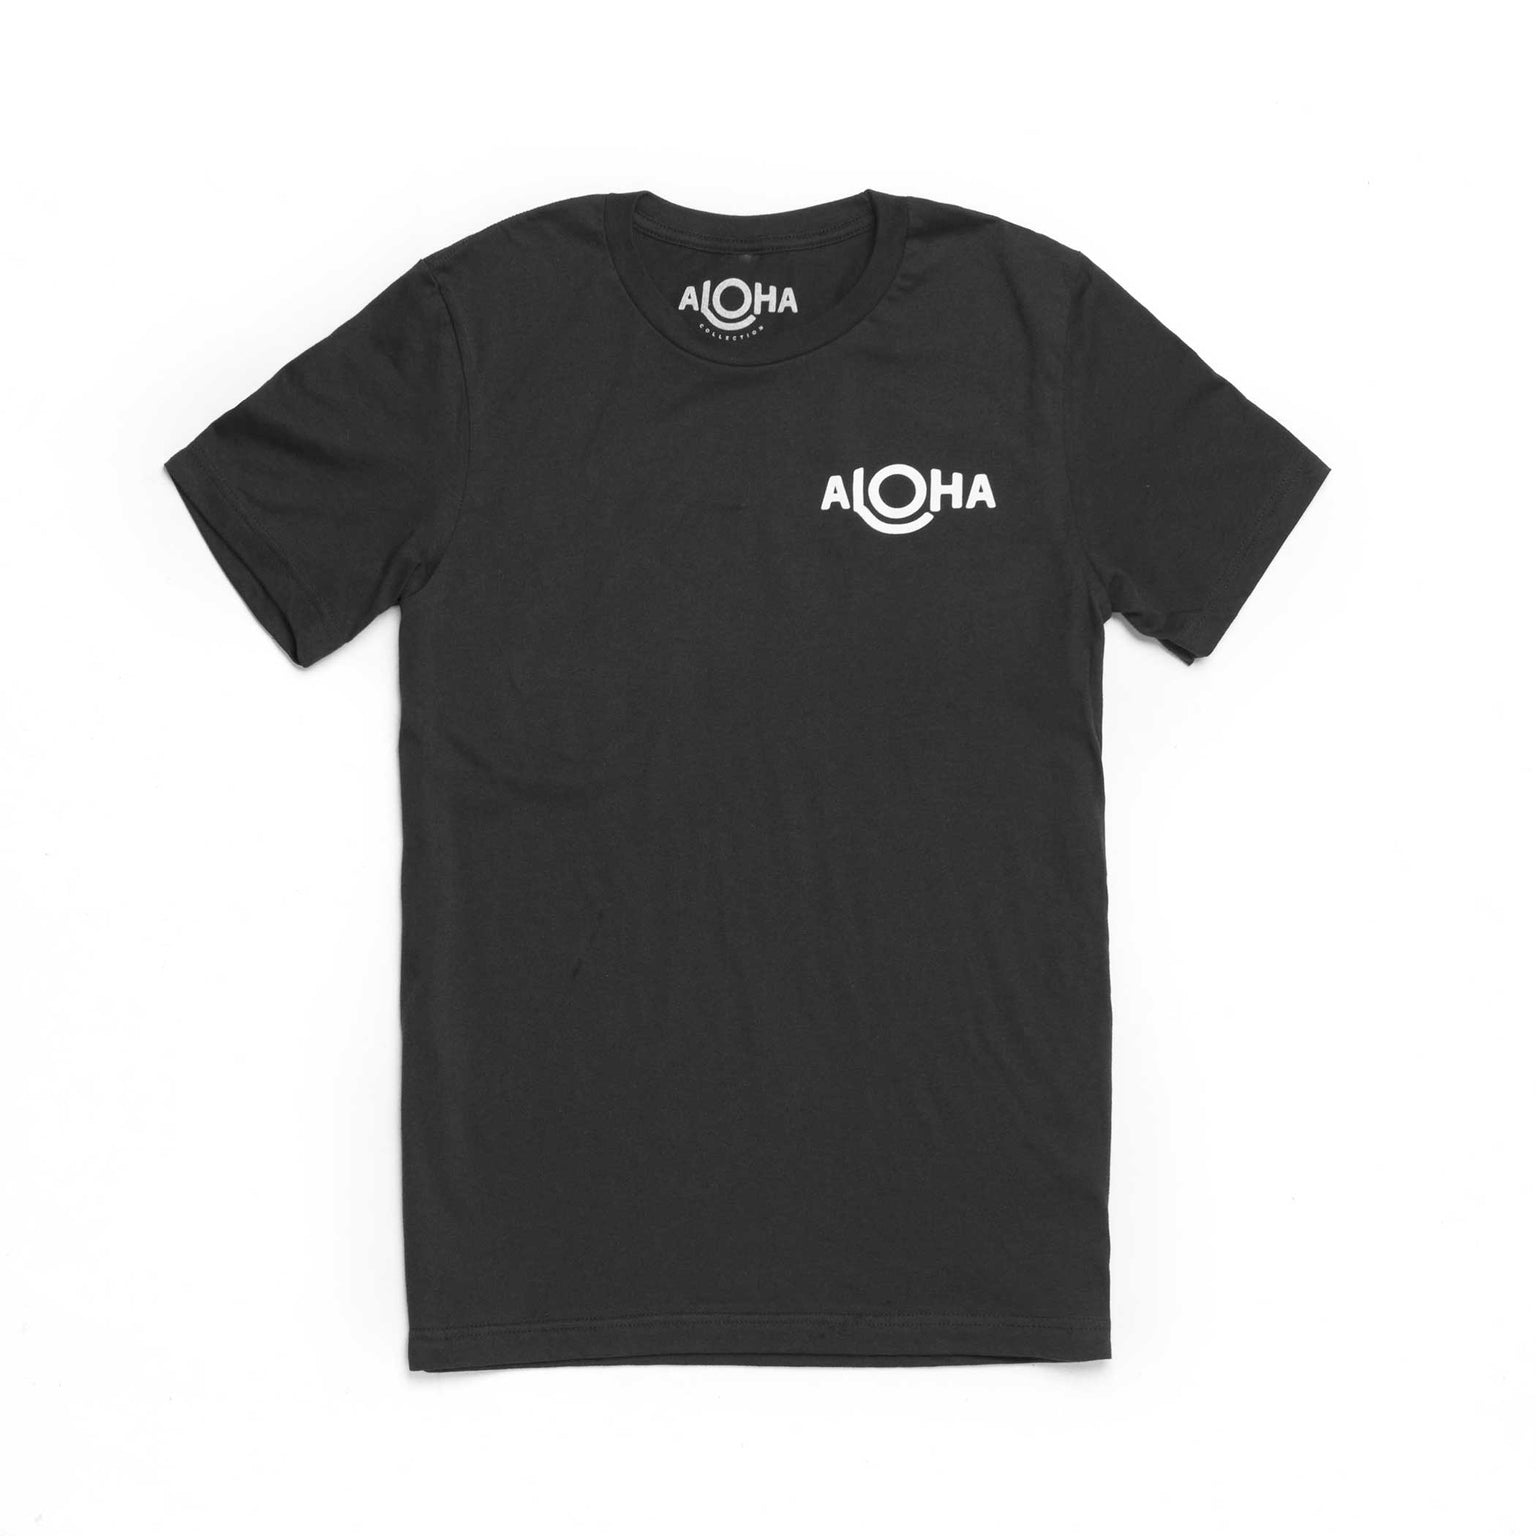 Mini Original ALOHA Pouch in White on Black | ALOHA Collection